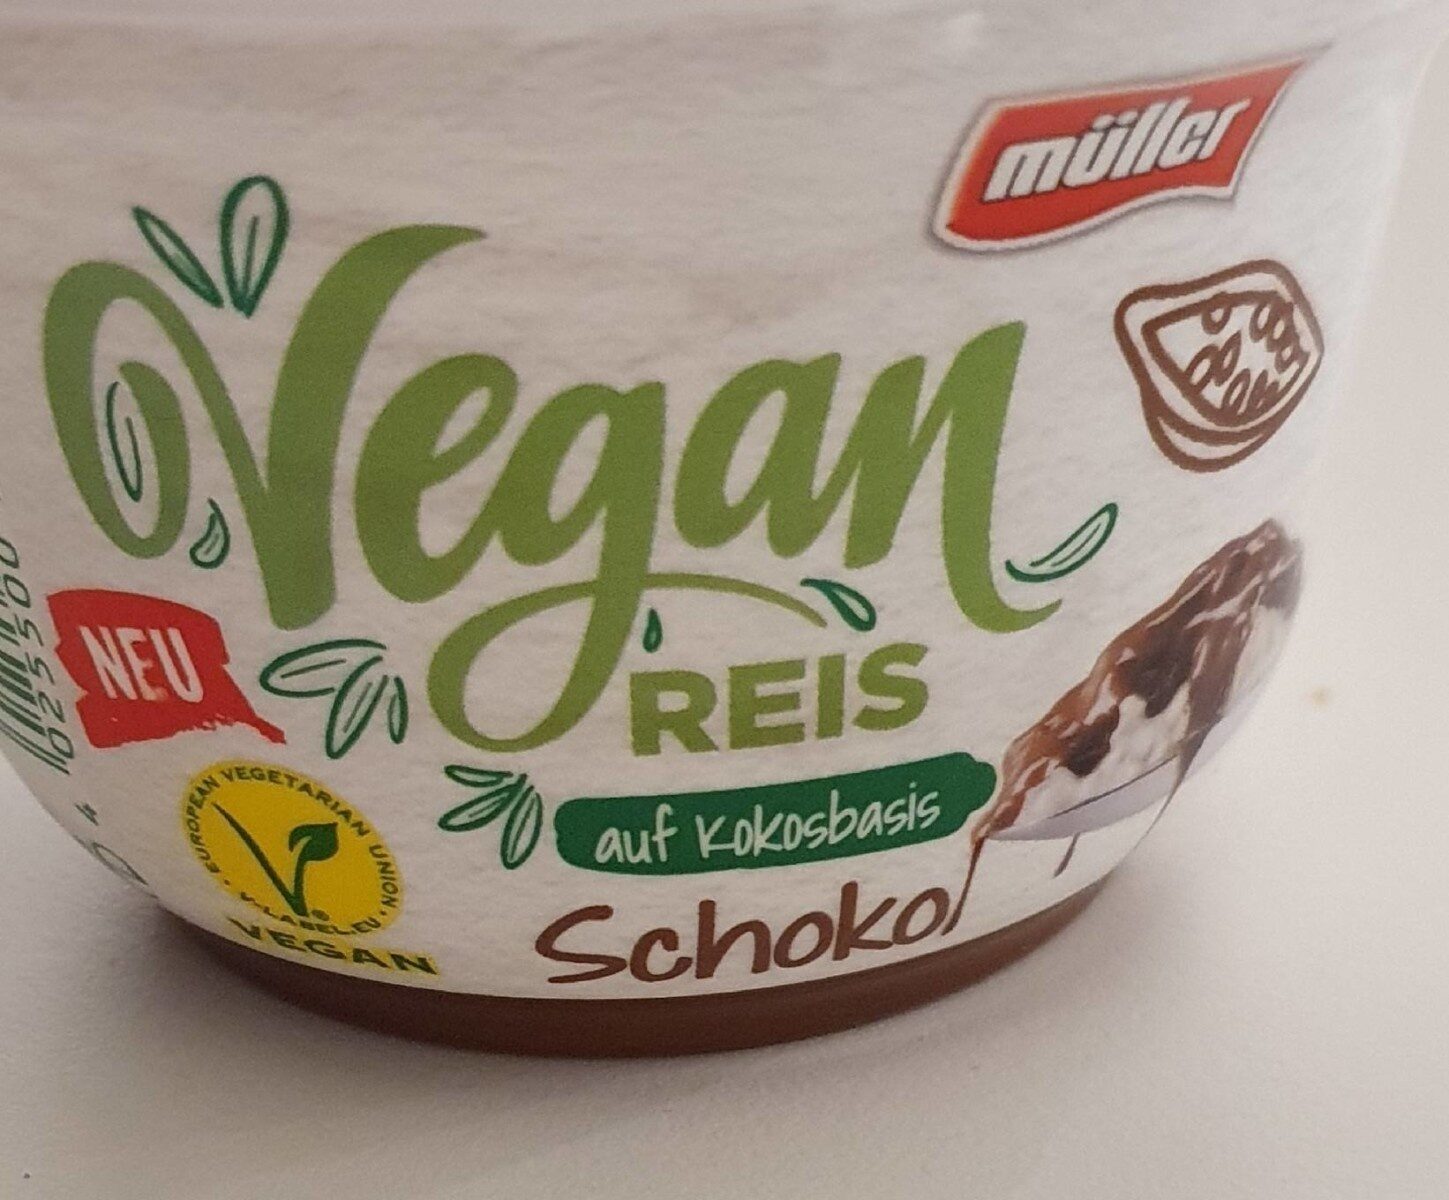 Vegan Reis auf Kokosbasis Schoko - Produkt